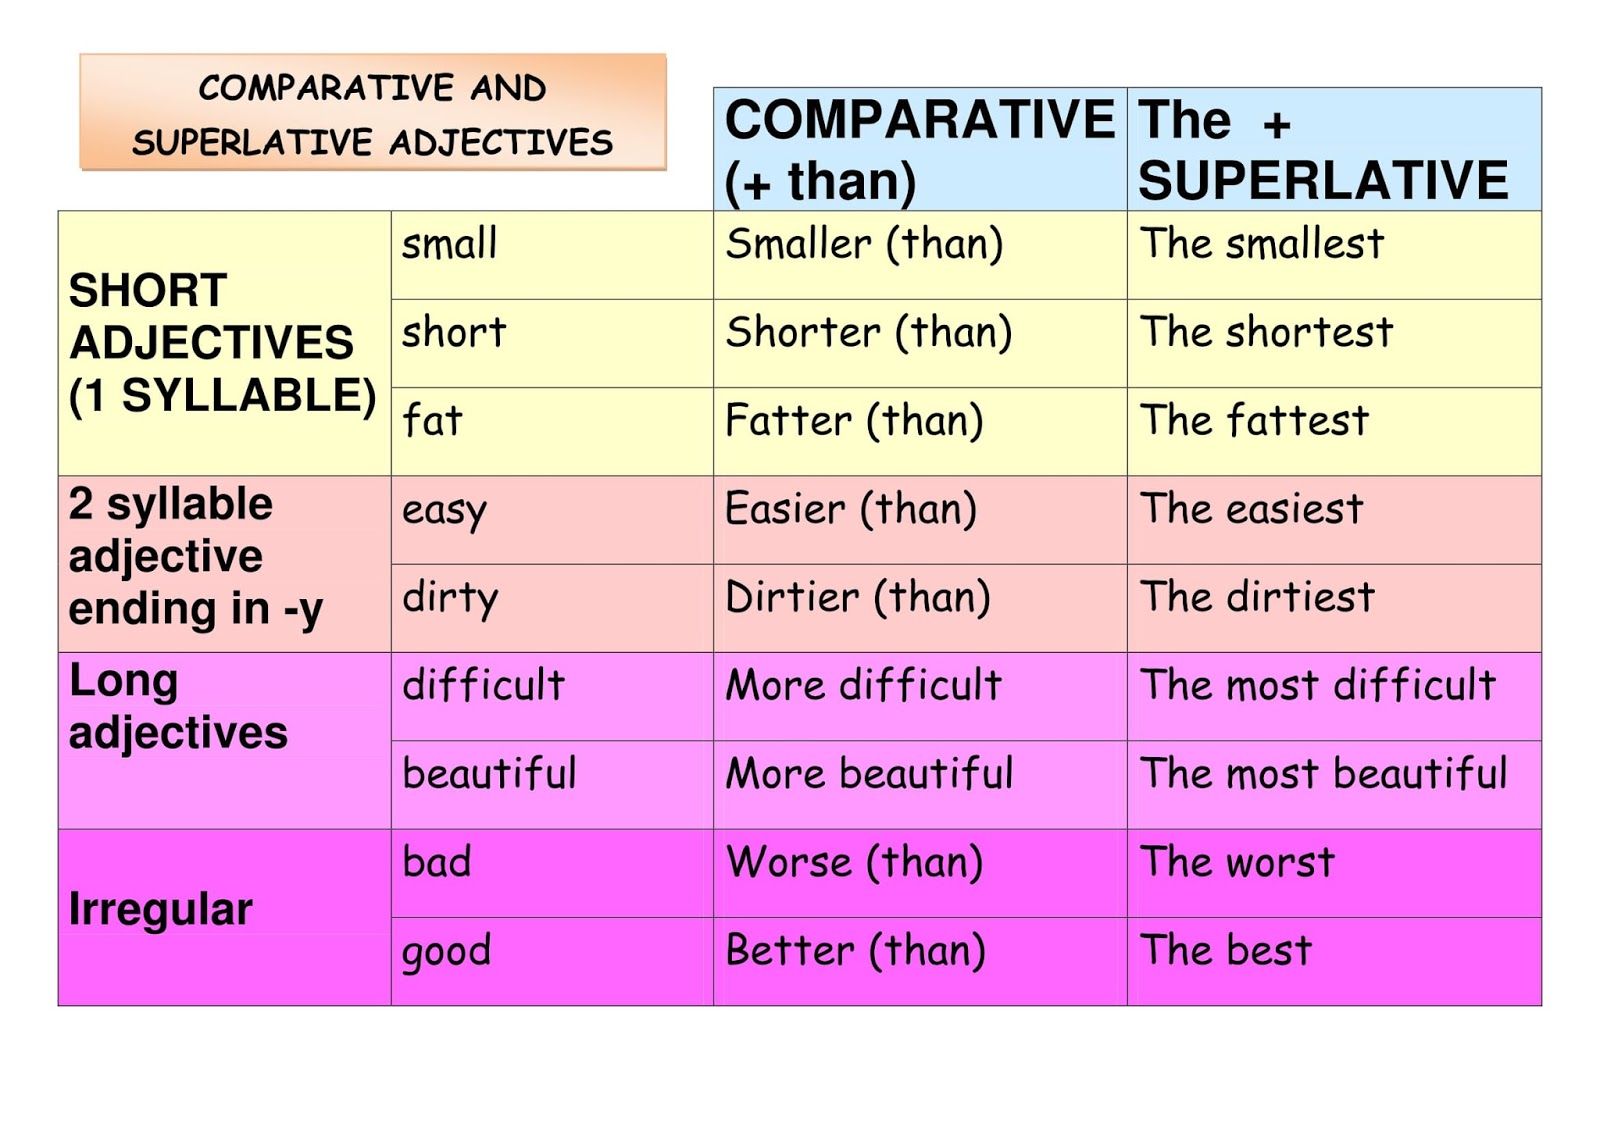 Make comparative adjectives. Superlative adjectives правило. Таблица Comparative and Superlative. Comparative and Superlative forms of adjectives. Comparative and Superlative adjectives правило.